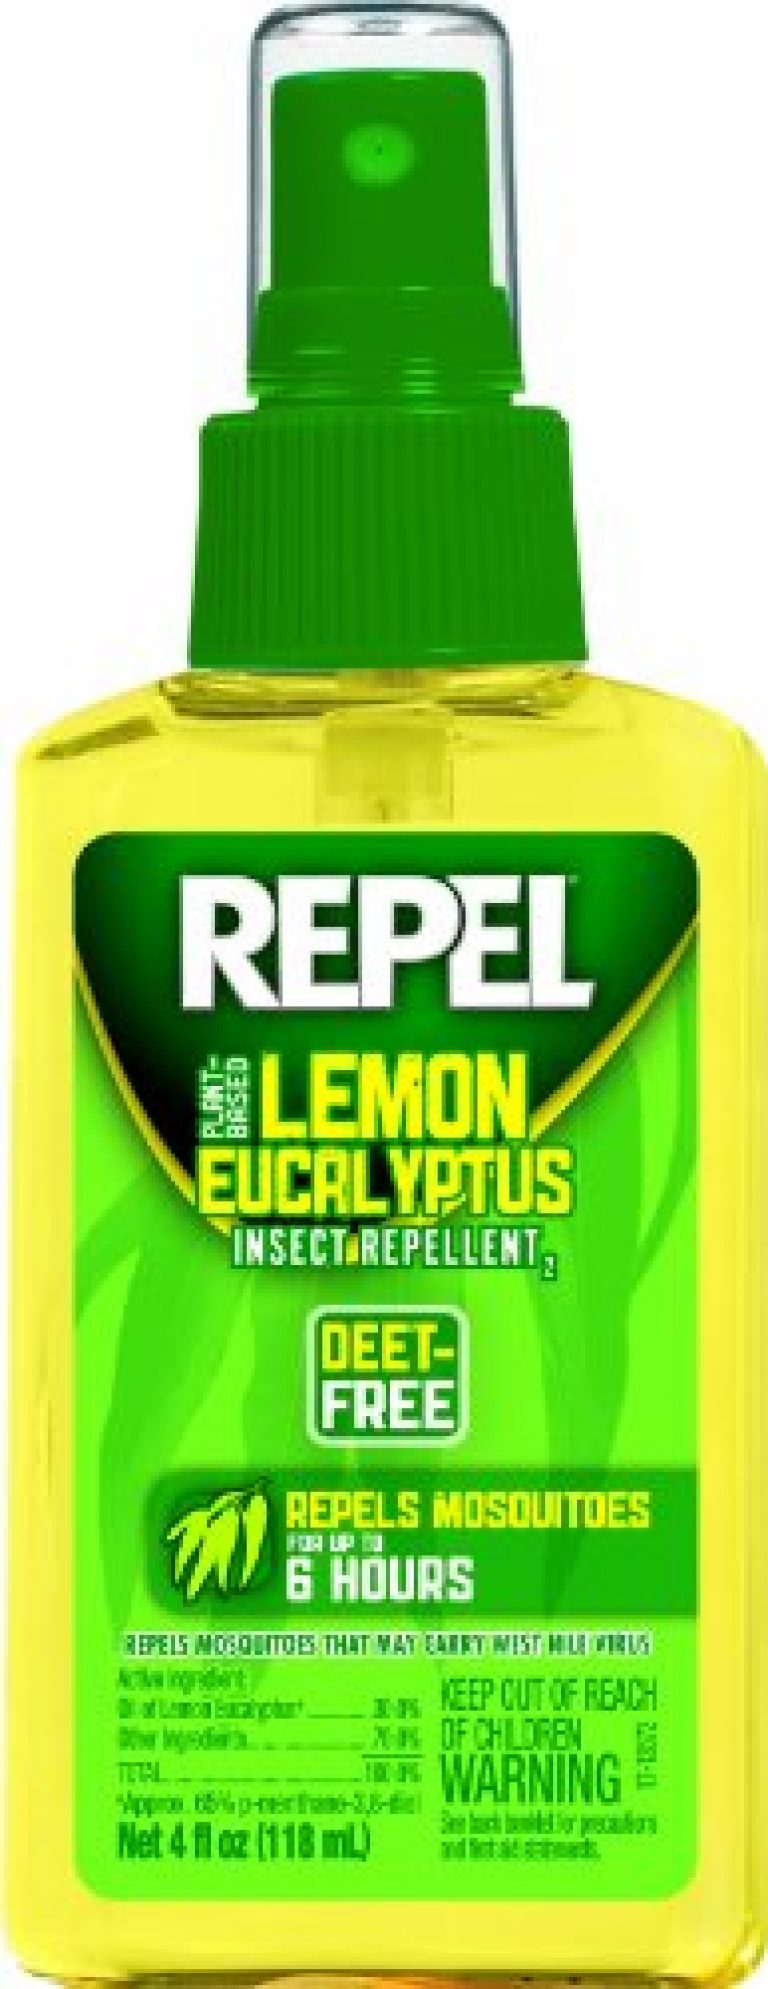 Repel Lemon Eucalyptus Natural Insect Repellent, 4Ounce Pump Spray